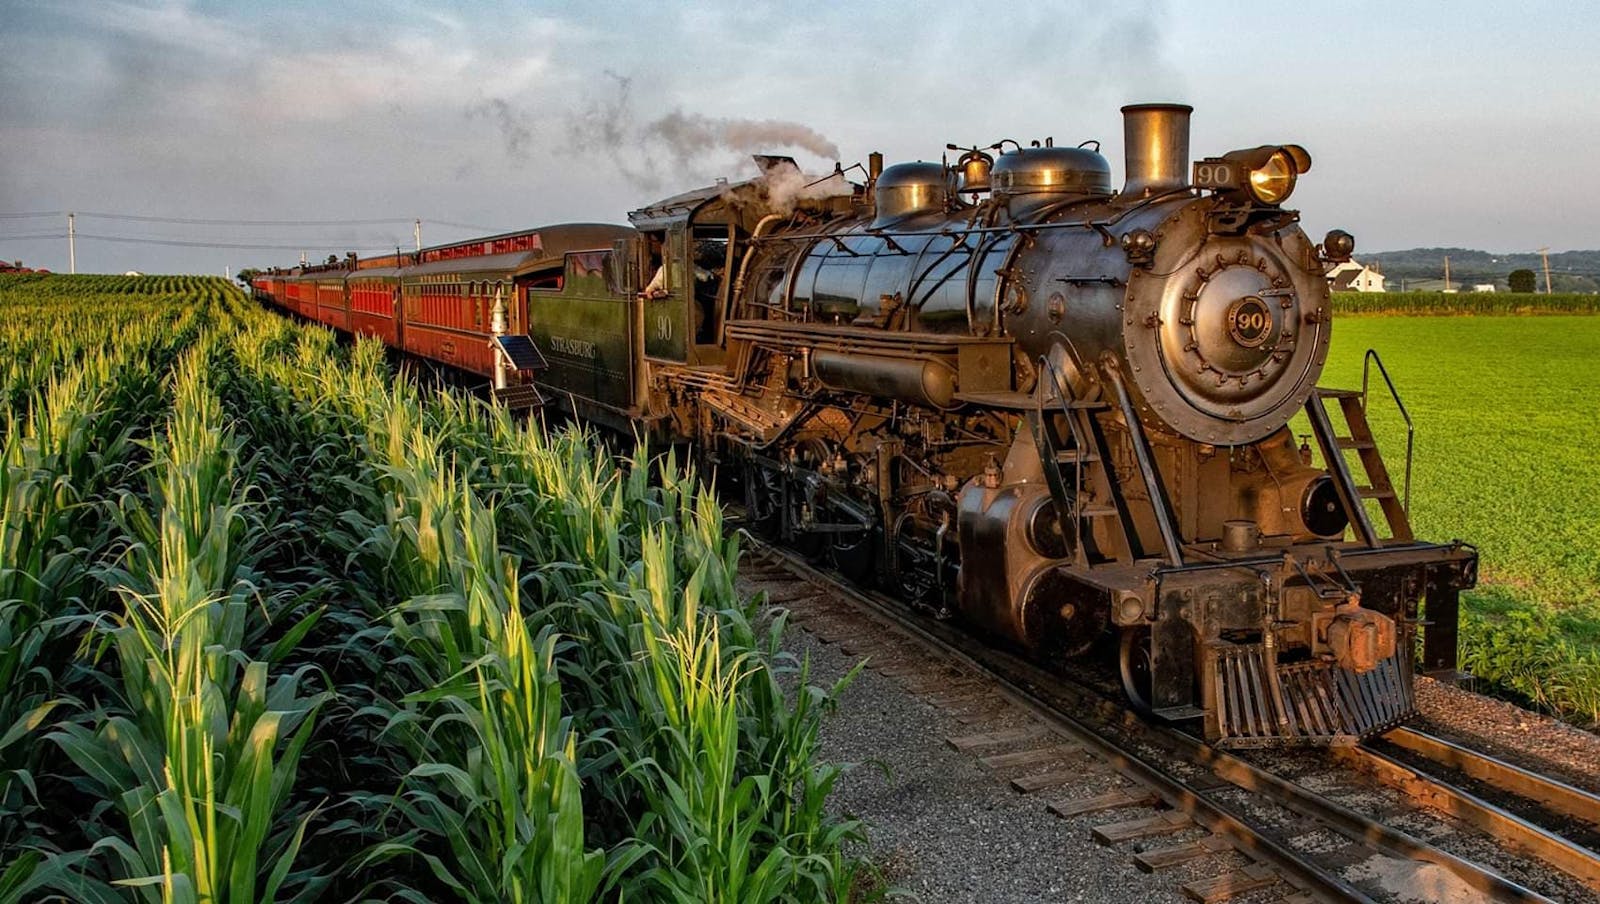 Strasburg Railroad themed train rides